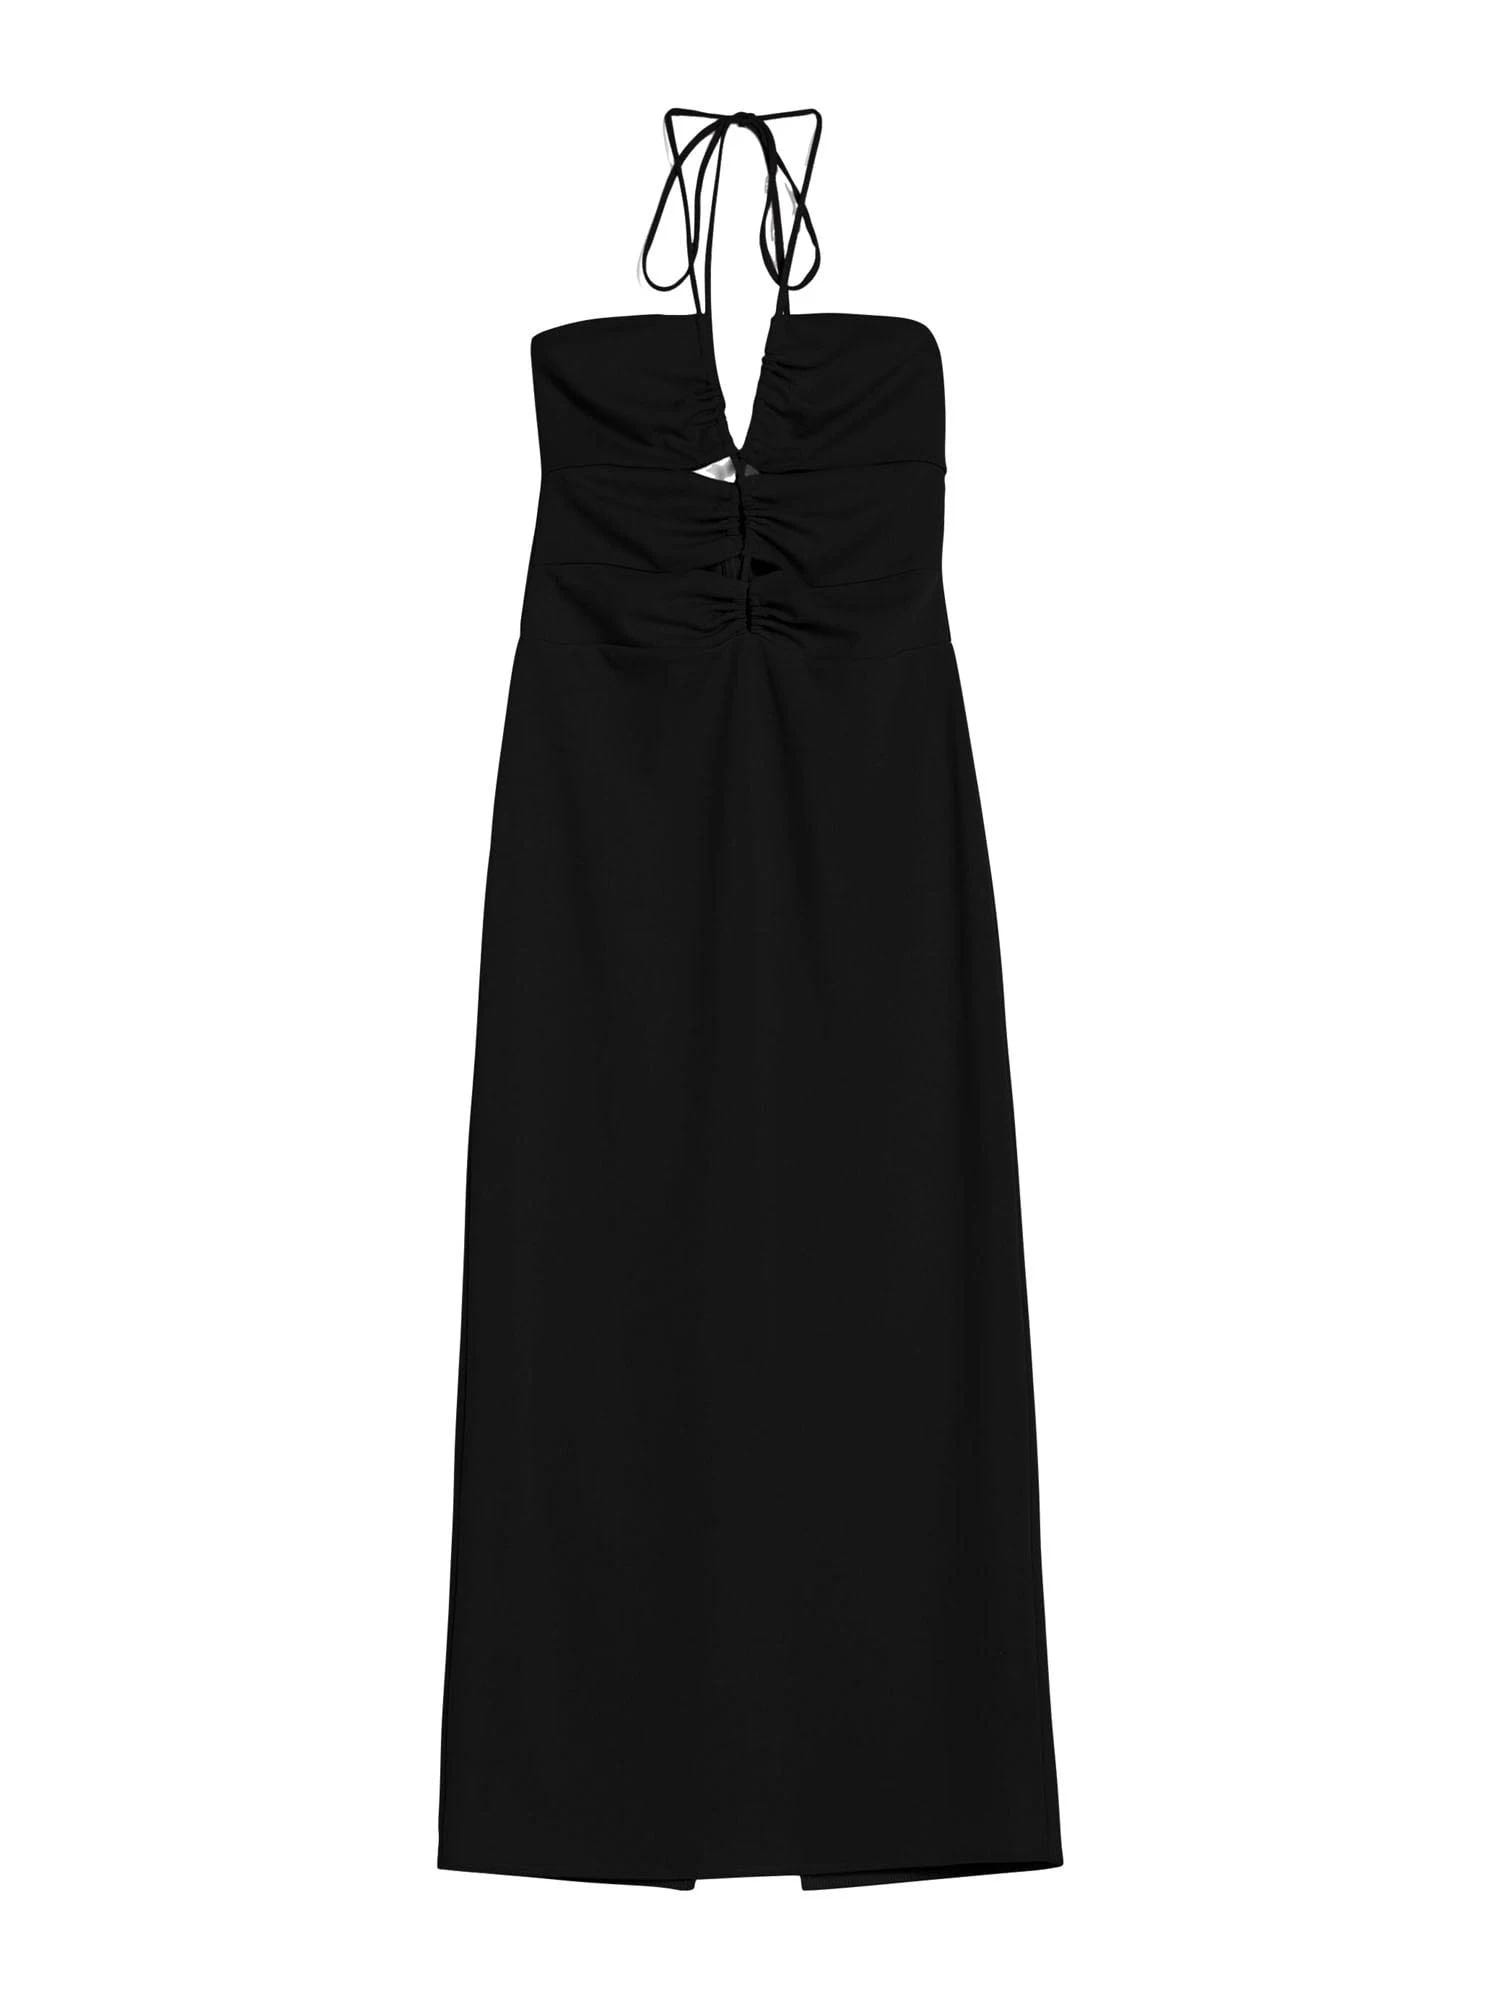 Black Ruffled Halter Midi Dress by Bershka | Image